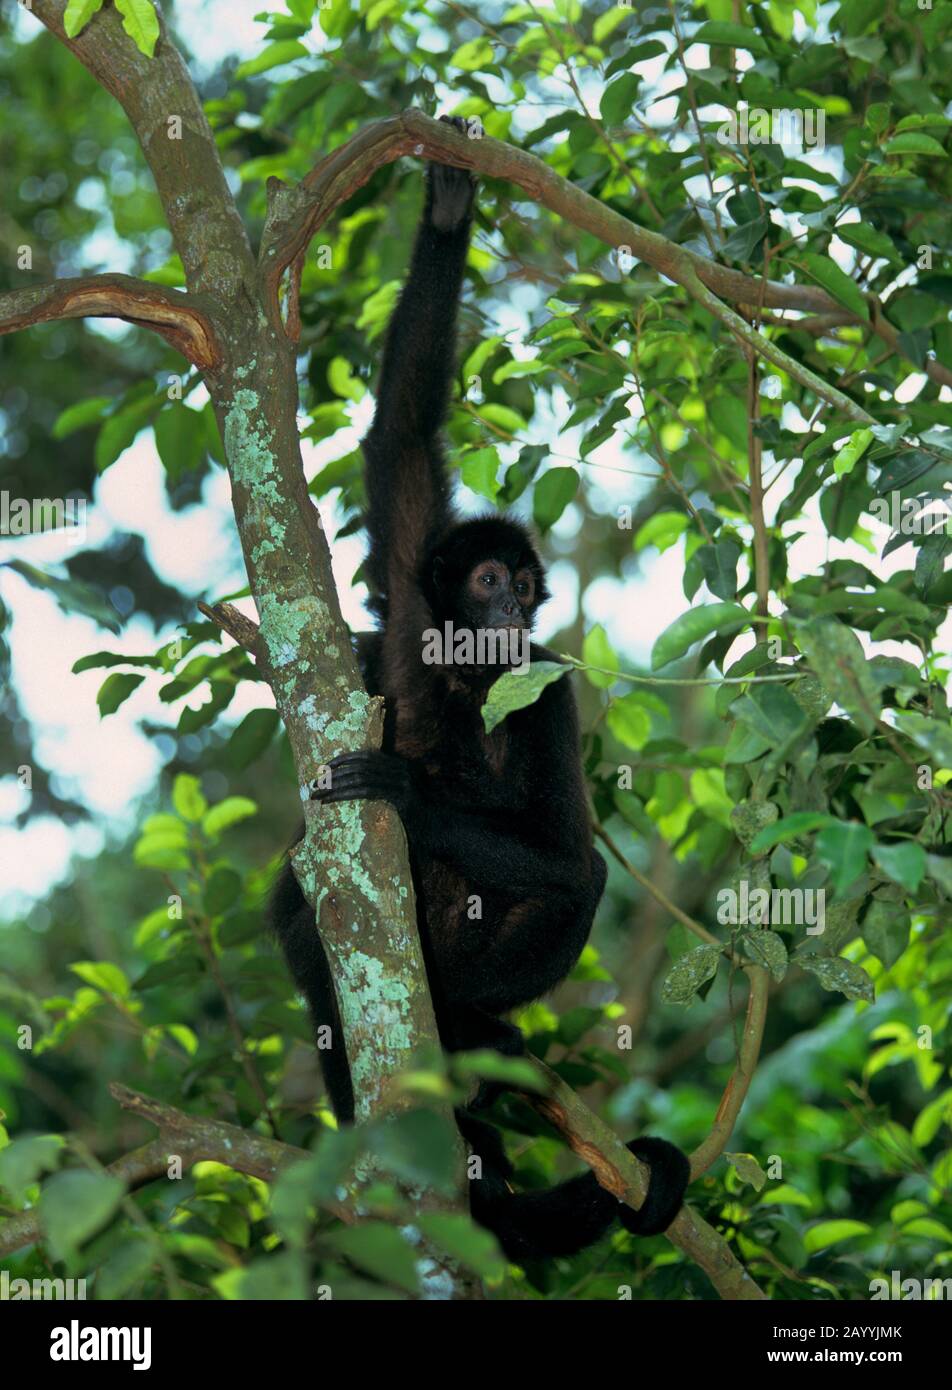 Mono araña negro (Ateles paniscus), animal joven sentado en una rama de un árbol Foto de stock